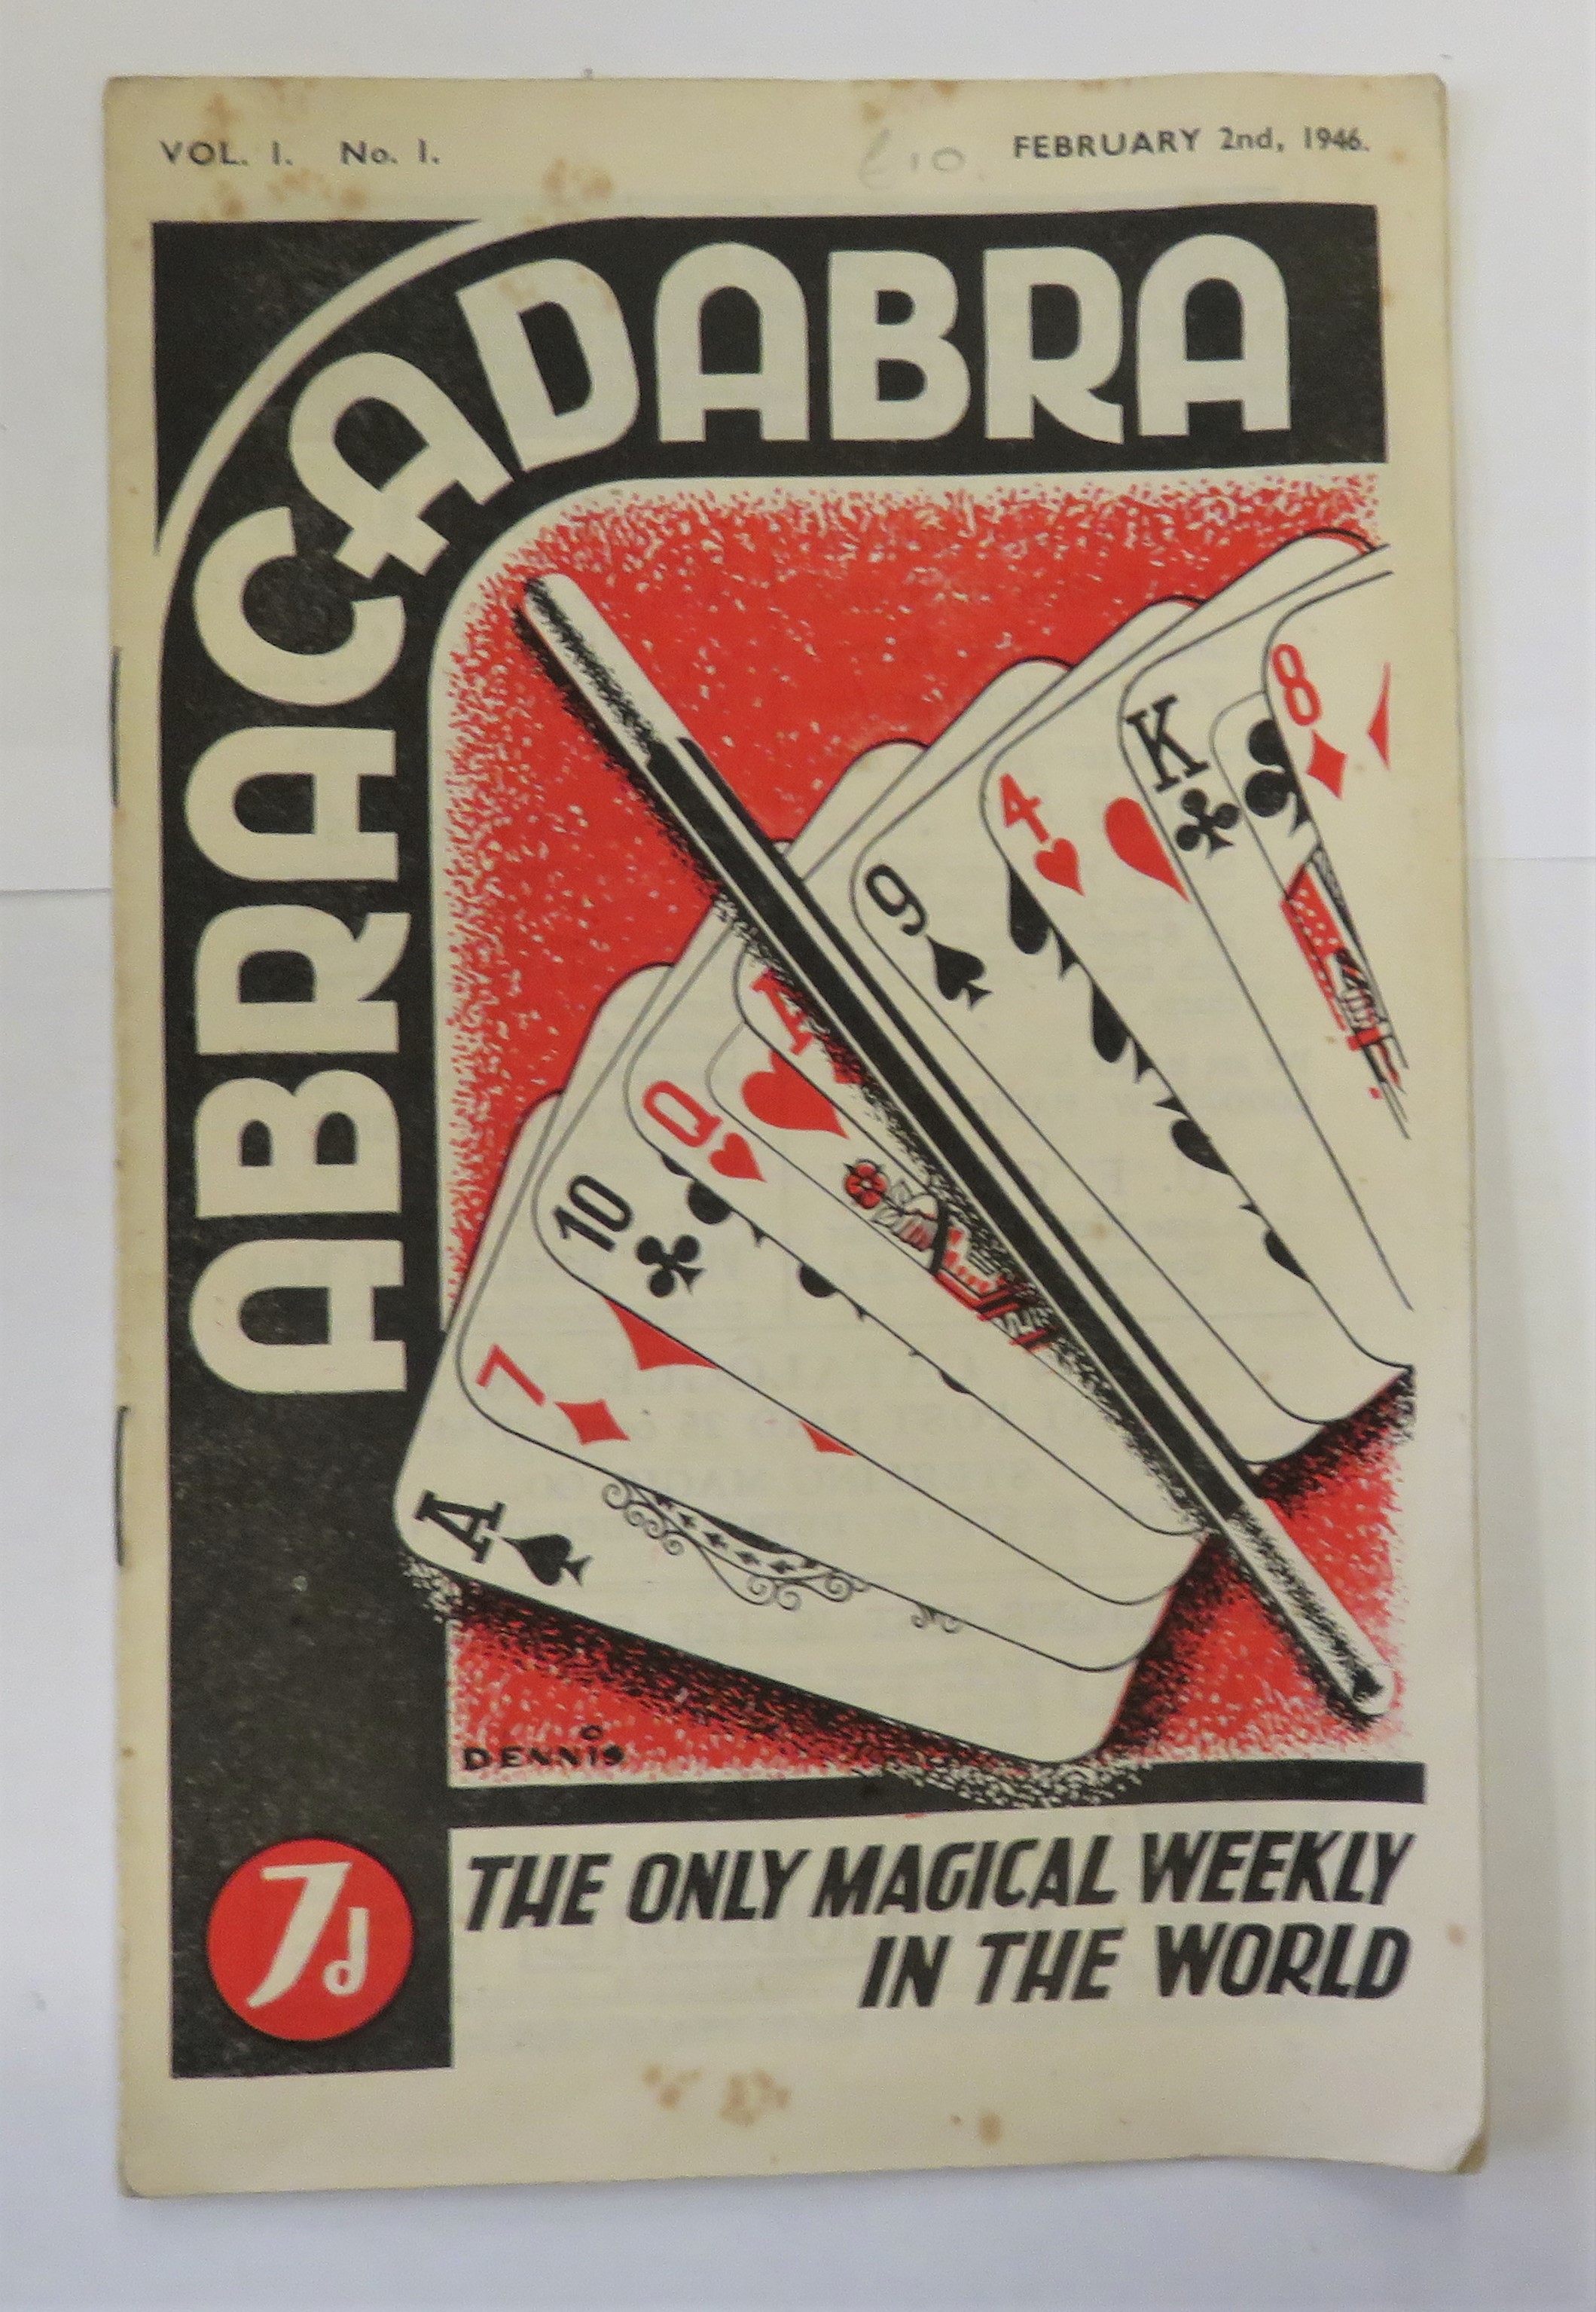 Abracadabra Vol 1 No.1 February 2nd 1946